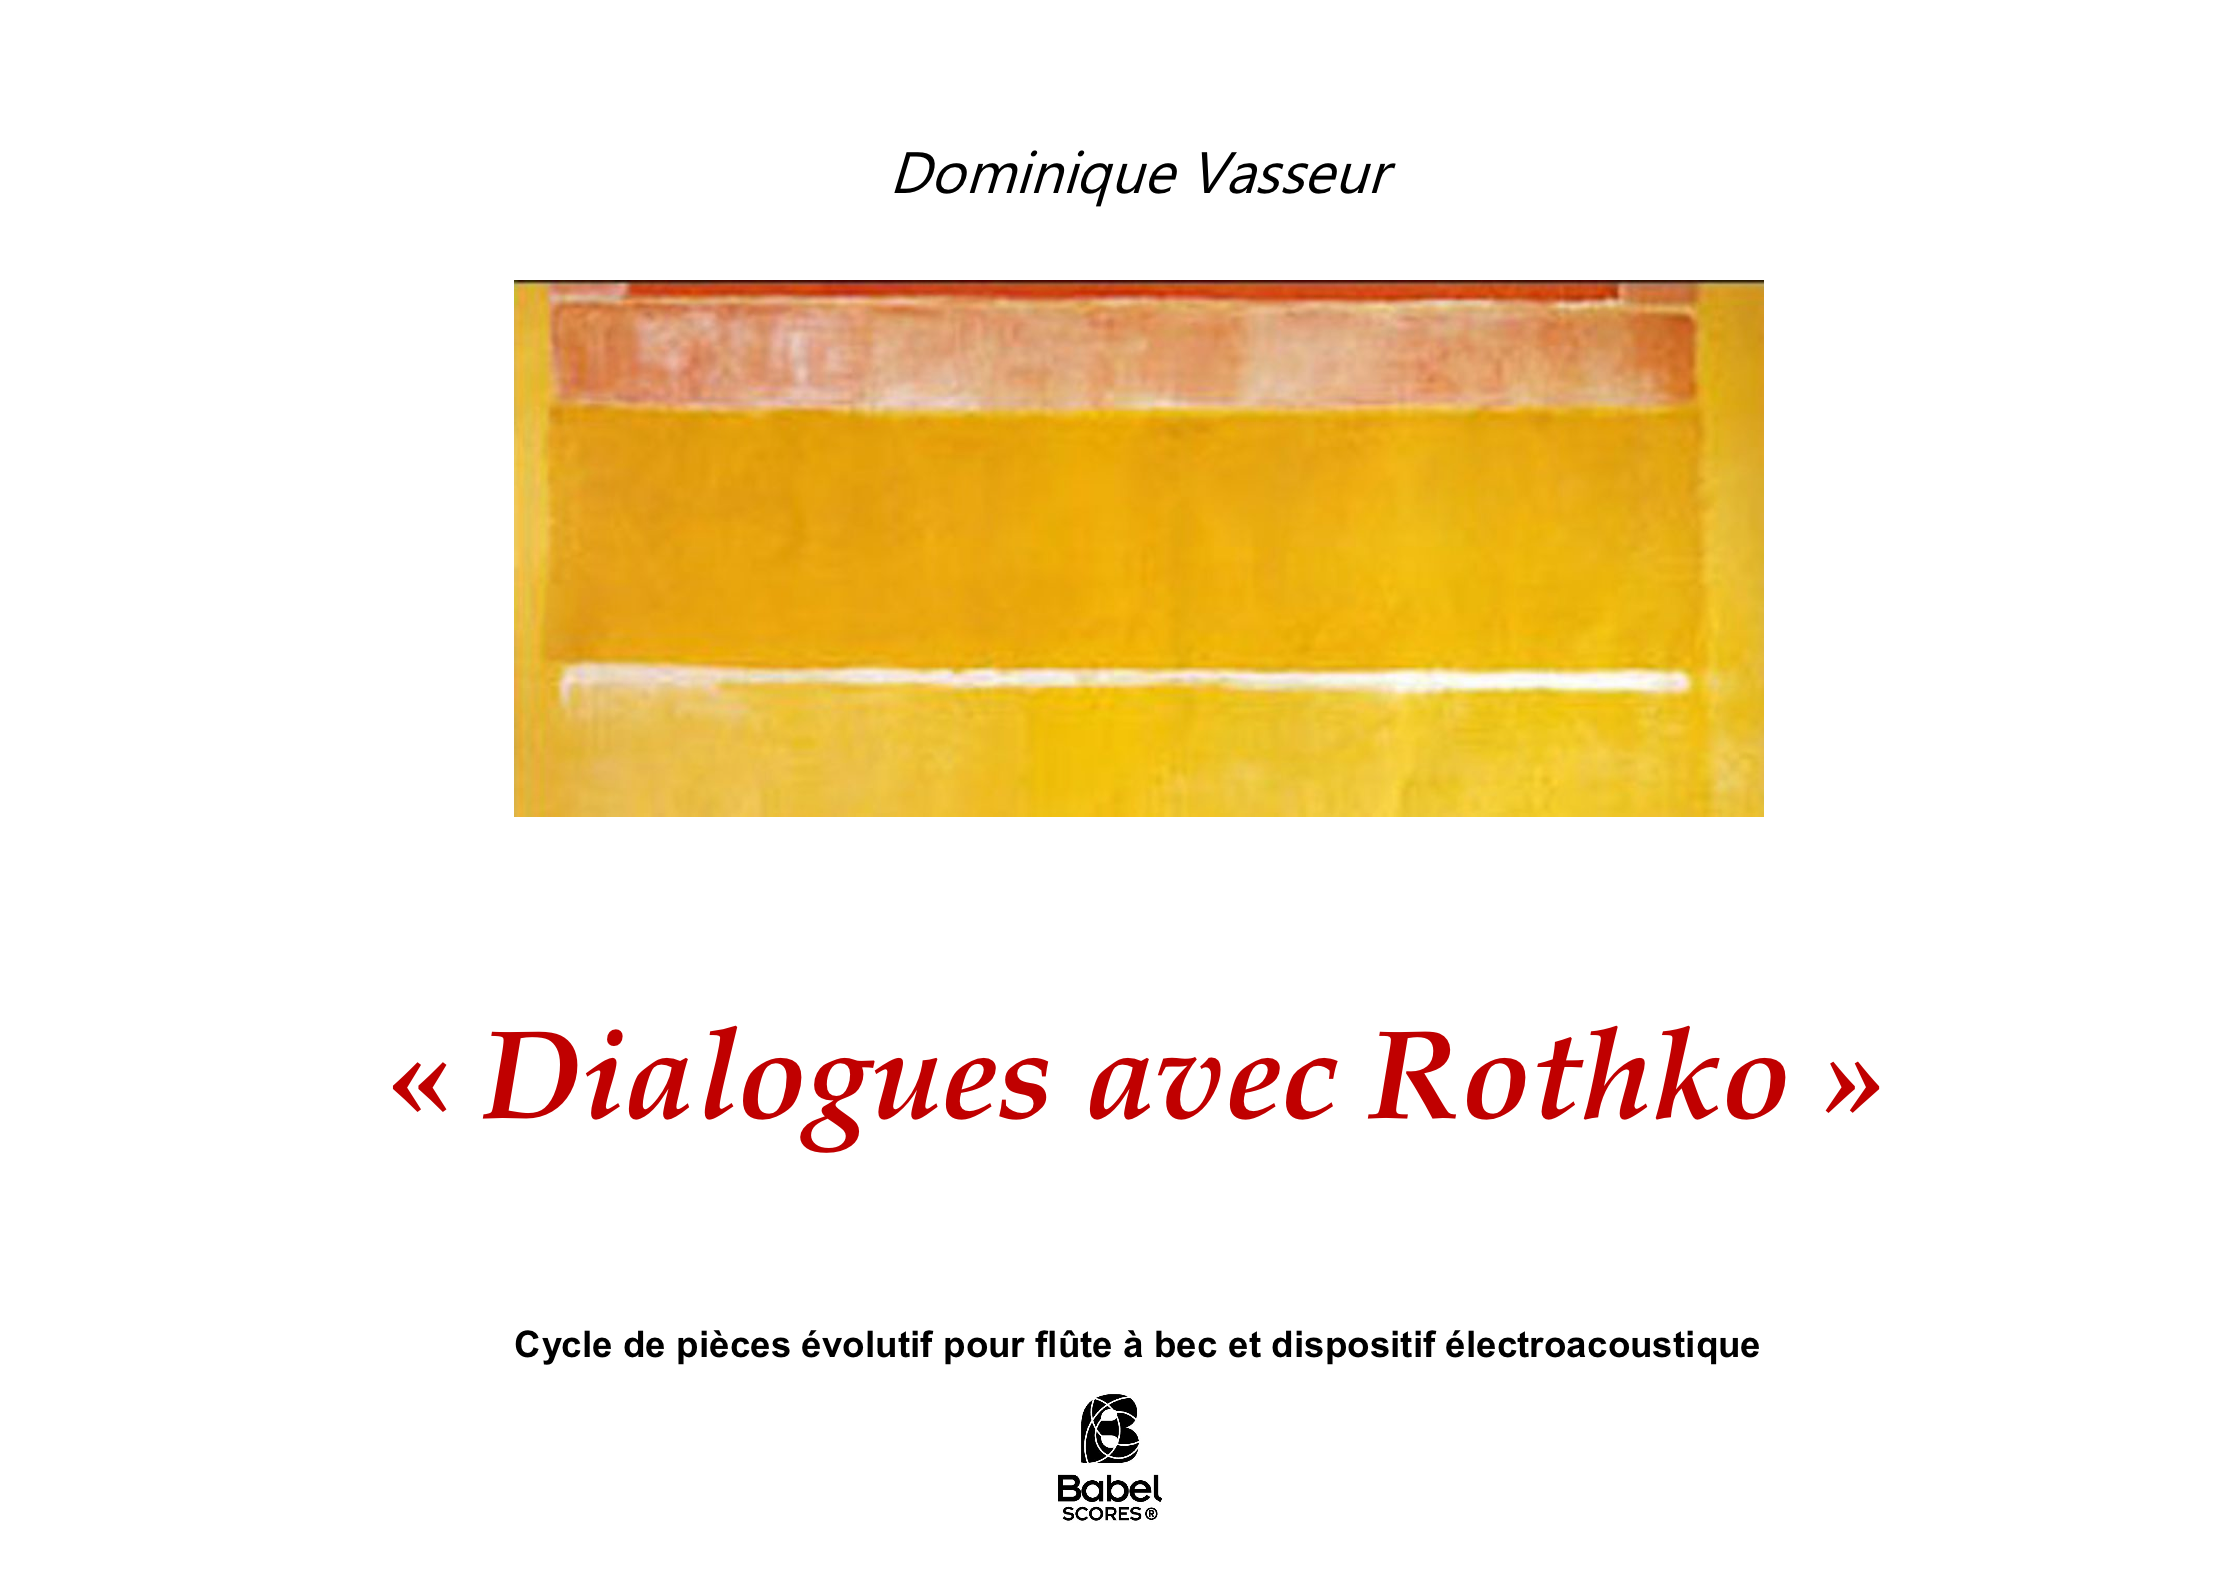 Dialogues avec Rothko 1 et 2 A4 z 3 1 41